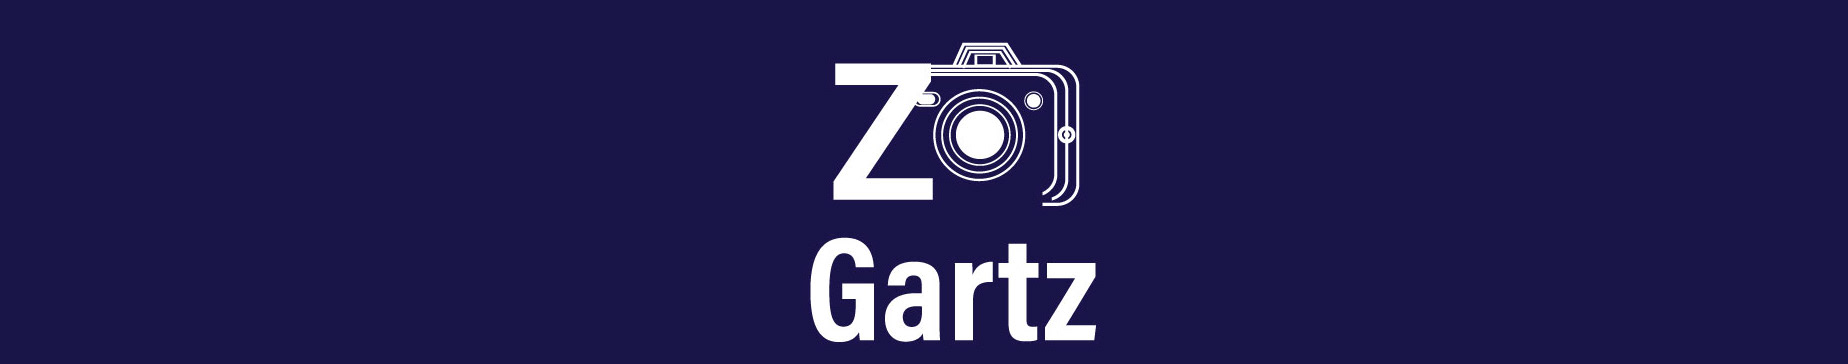 Zibdy García Robles's profile banner